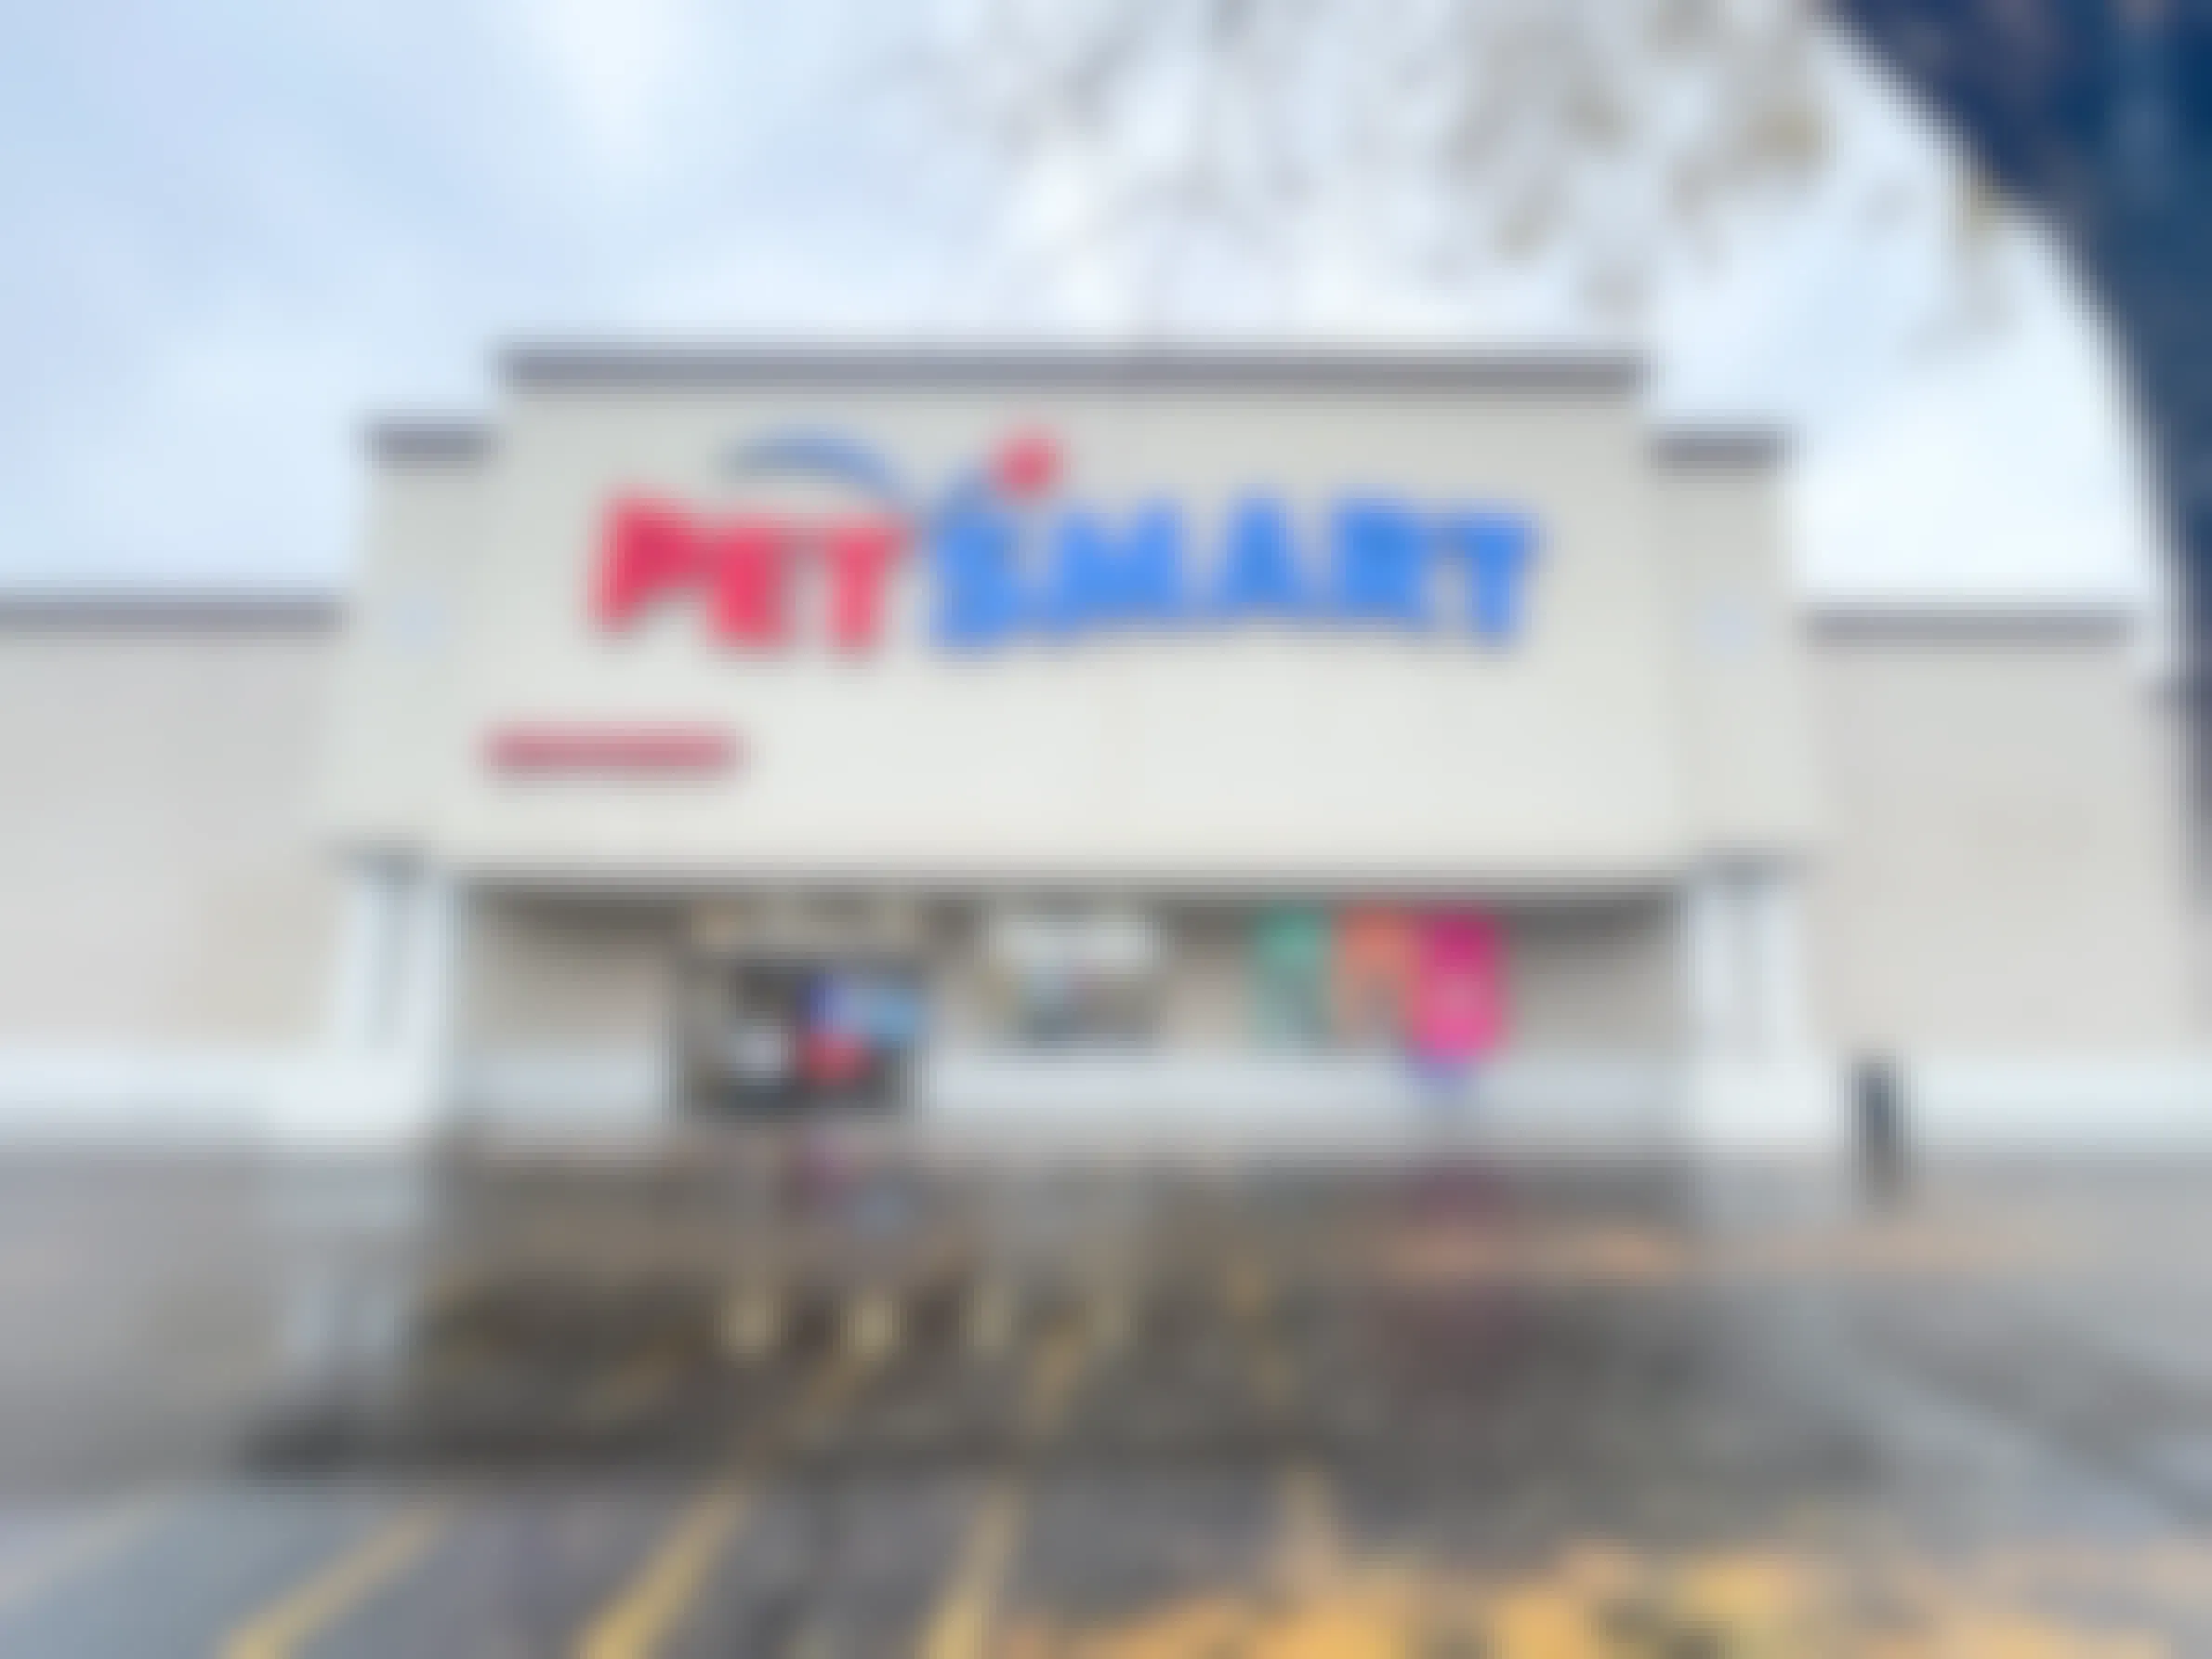 A Petsmart store front.